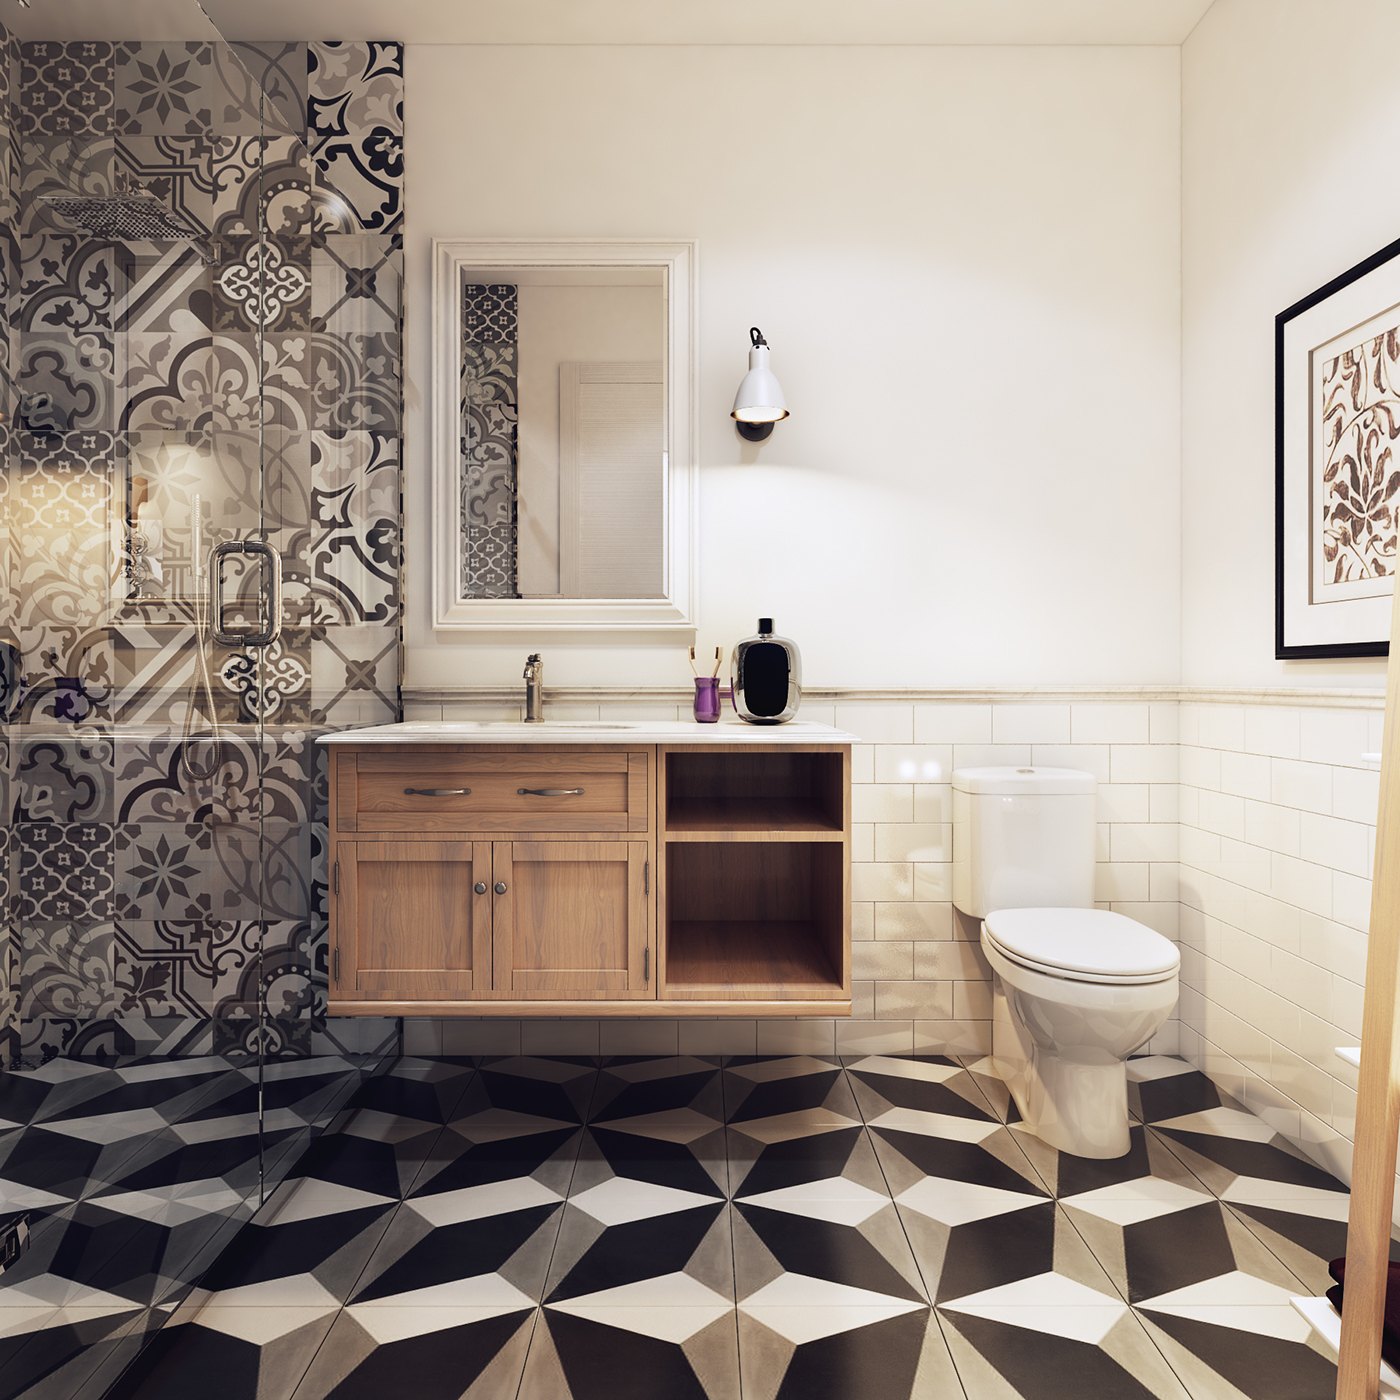 fantastic geometric bathroom "width =" 1400 "height =" 1400 "srcset =" https://mileray.com/wp-content/uploads/2020/05/1588516440_583_Scandinavian-Bathroom-Design-Ideas-With-White-Color-Shade-Which-Can.jpg 1400w, https: //mileray.com/wp-content/uploads/2016/09/awesome-geometric-bathroom-Koj-Design-150x150.jpg 150w, https://mileray.com/wp-content/uploads/2016/09/awesome -geometric-bathroom-koj-design-300x300.jpg 300w, https://mileray.com/wp-content/uploads/2016/09/awesome-geometric-bathroom-Koj-Design-768x768.jpg 768w, https: / /mileray.com/wp-content/uploads/2016/09/awesome-geometric-bathroom-Koj-Design-1024x1024.jpg 1024w, https://mileray.com/wp-content/uploads/2016/09/awesome- geometric-bathroom-koj-design-696x696.jpg 696w, https://mileray.com/wp-content/uploads/2016/09/awesome-geometric-bathroom-Koj-Design-1068x1068.jpg 1068w, https: // mileray.com/wp-content/uploads/2016/09/awesome-geometric-bathroom-Koj-Design-420x420.jpg 420w "Sizes =" (maximum width: 1400px) 100vw, 1400px